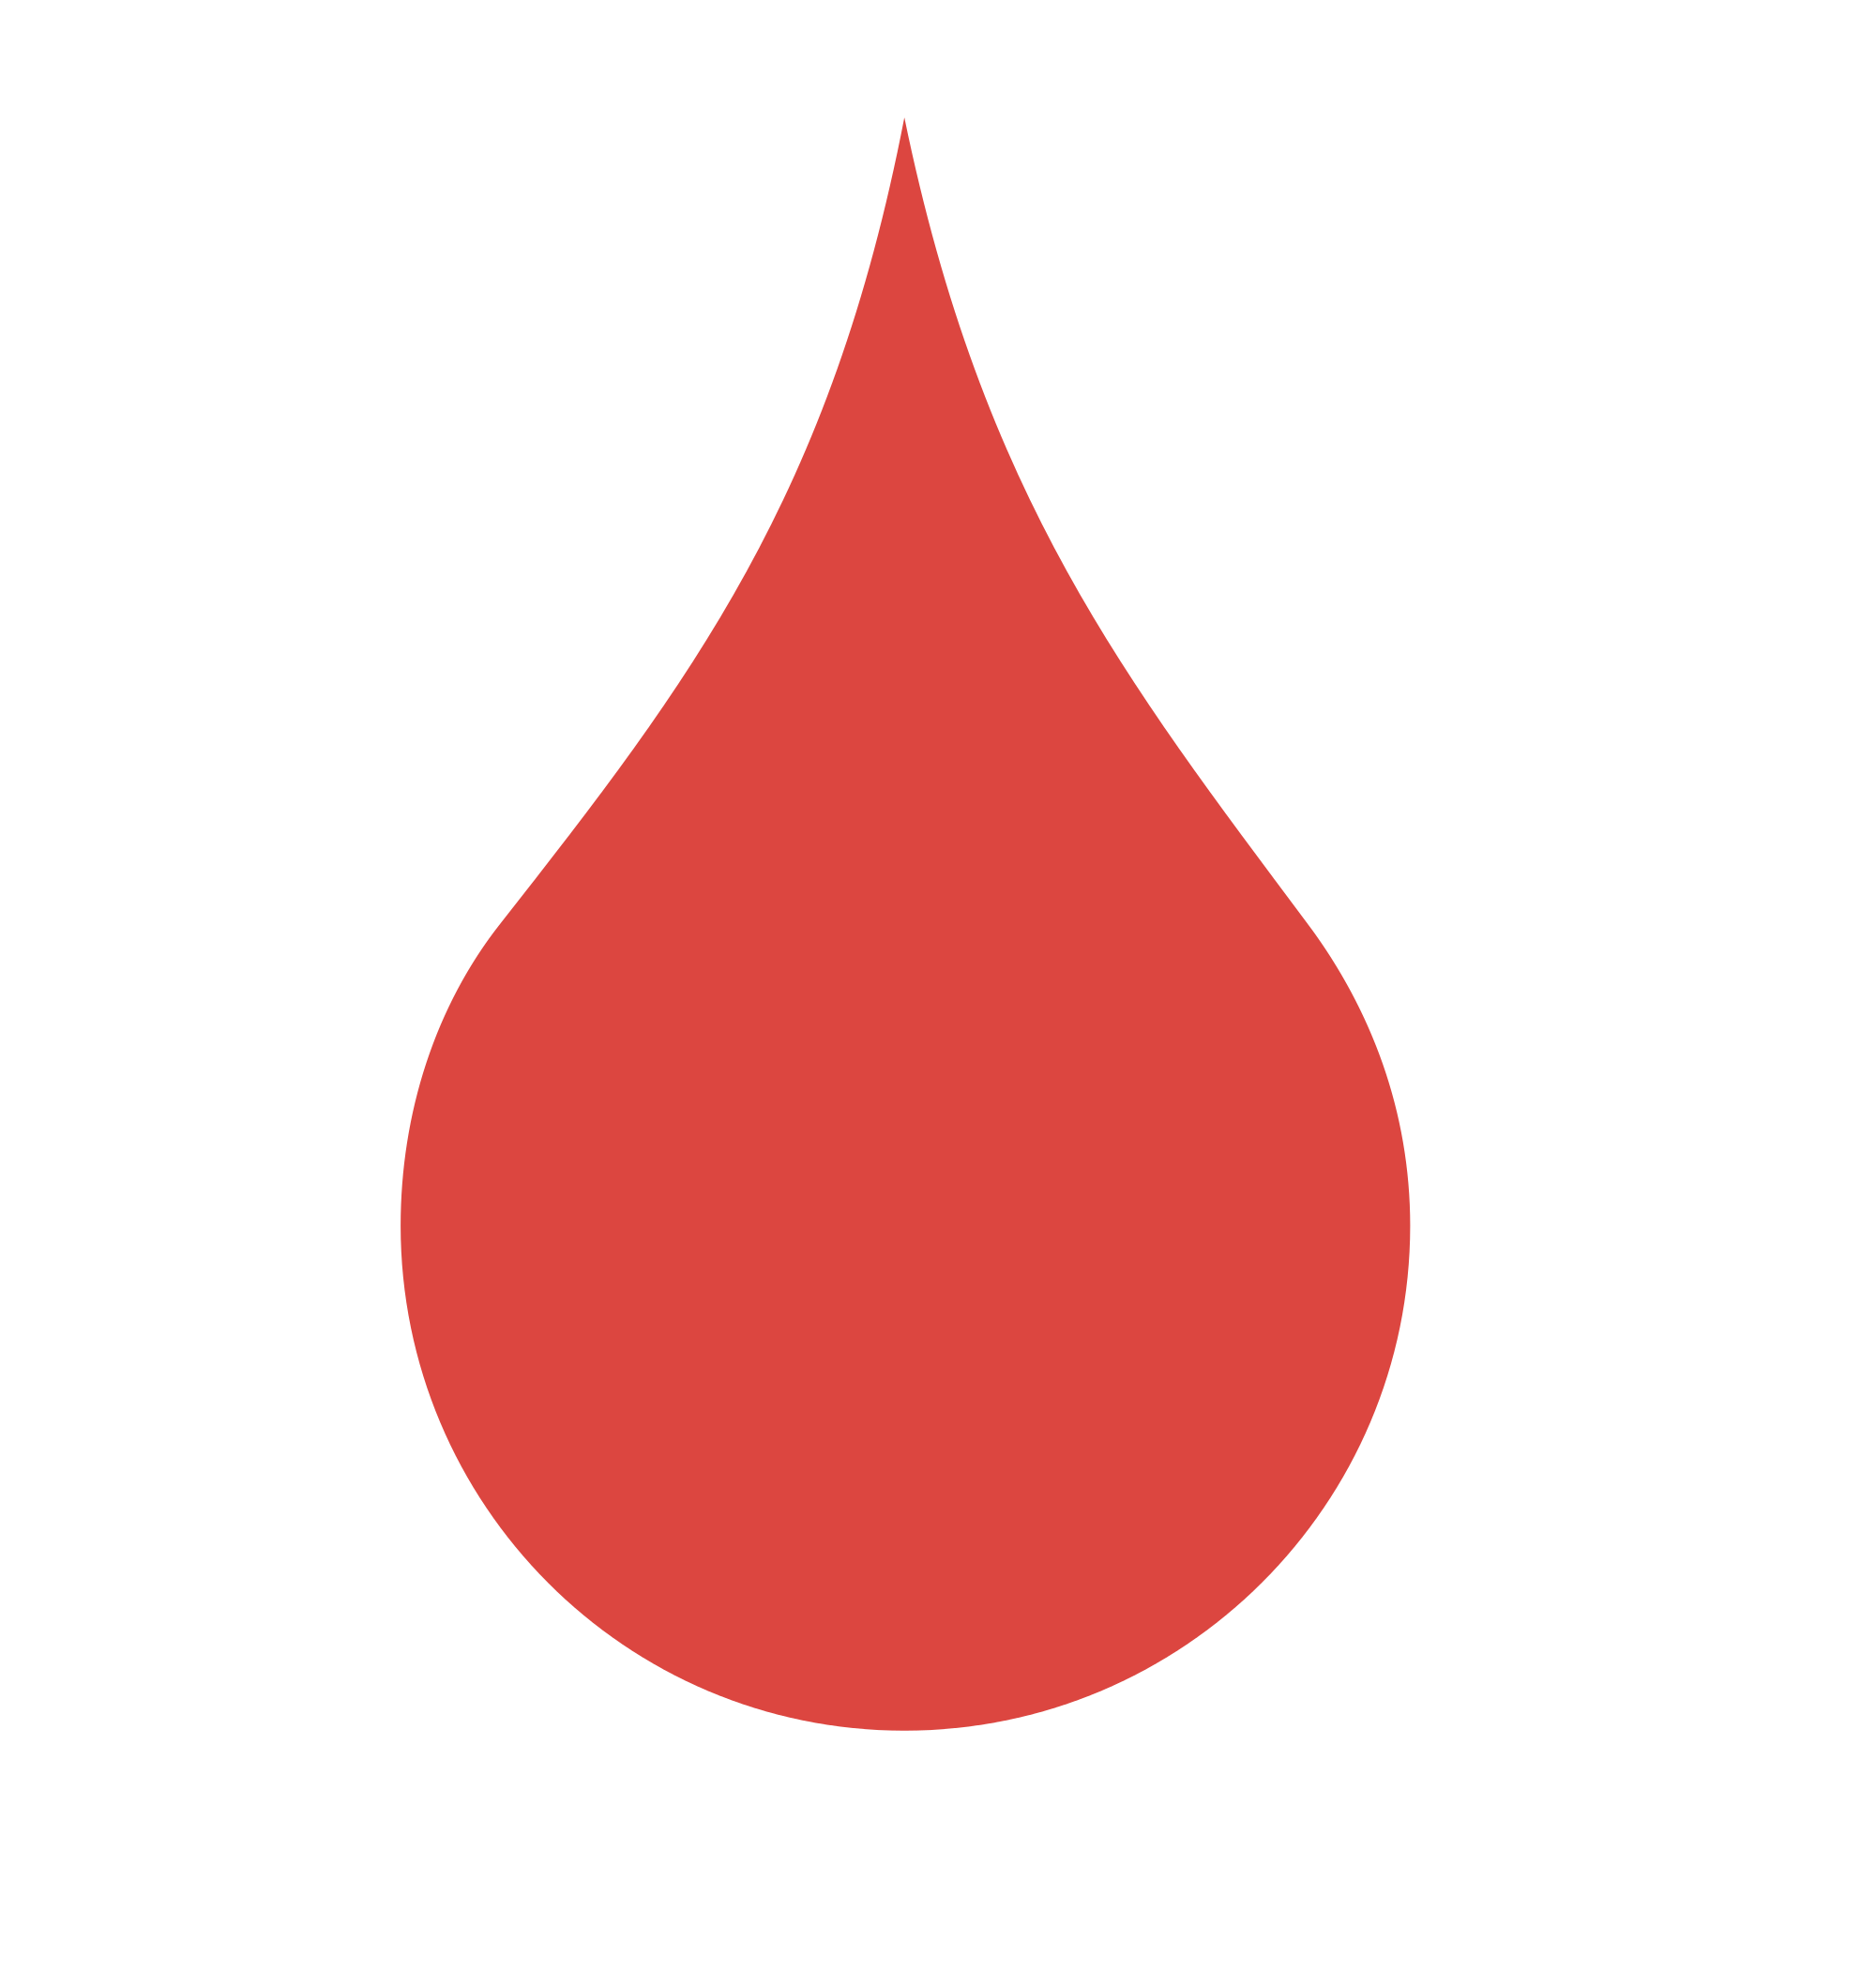 File:Blood drop plain.svg - Wikimedia Commons